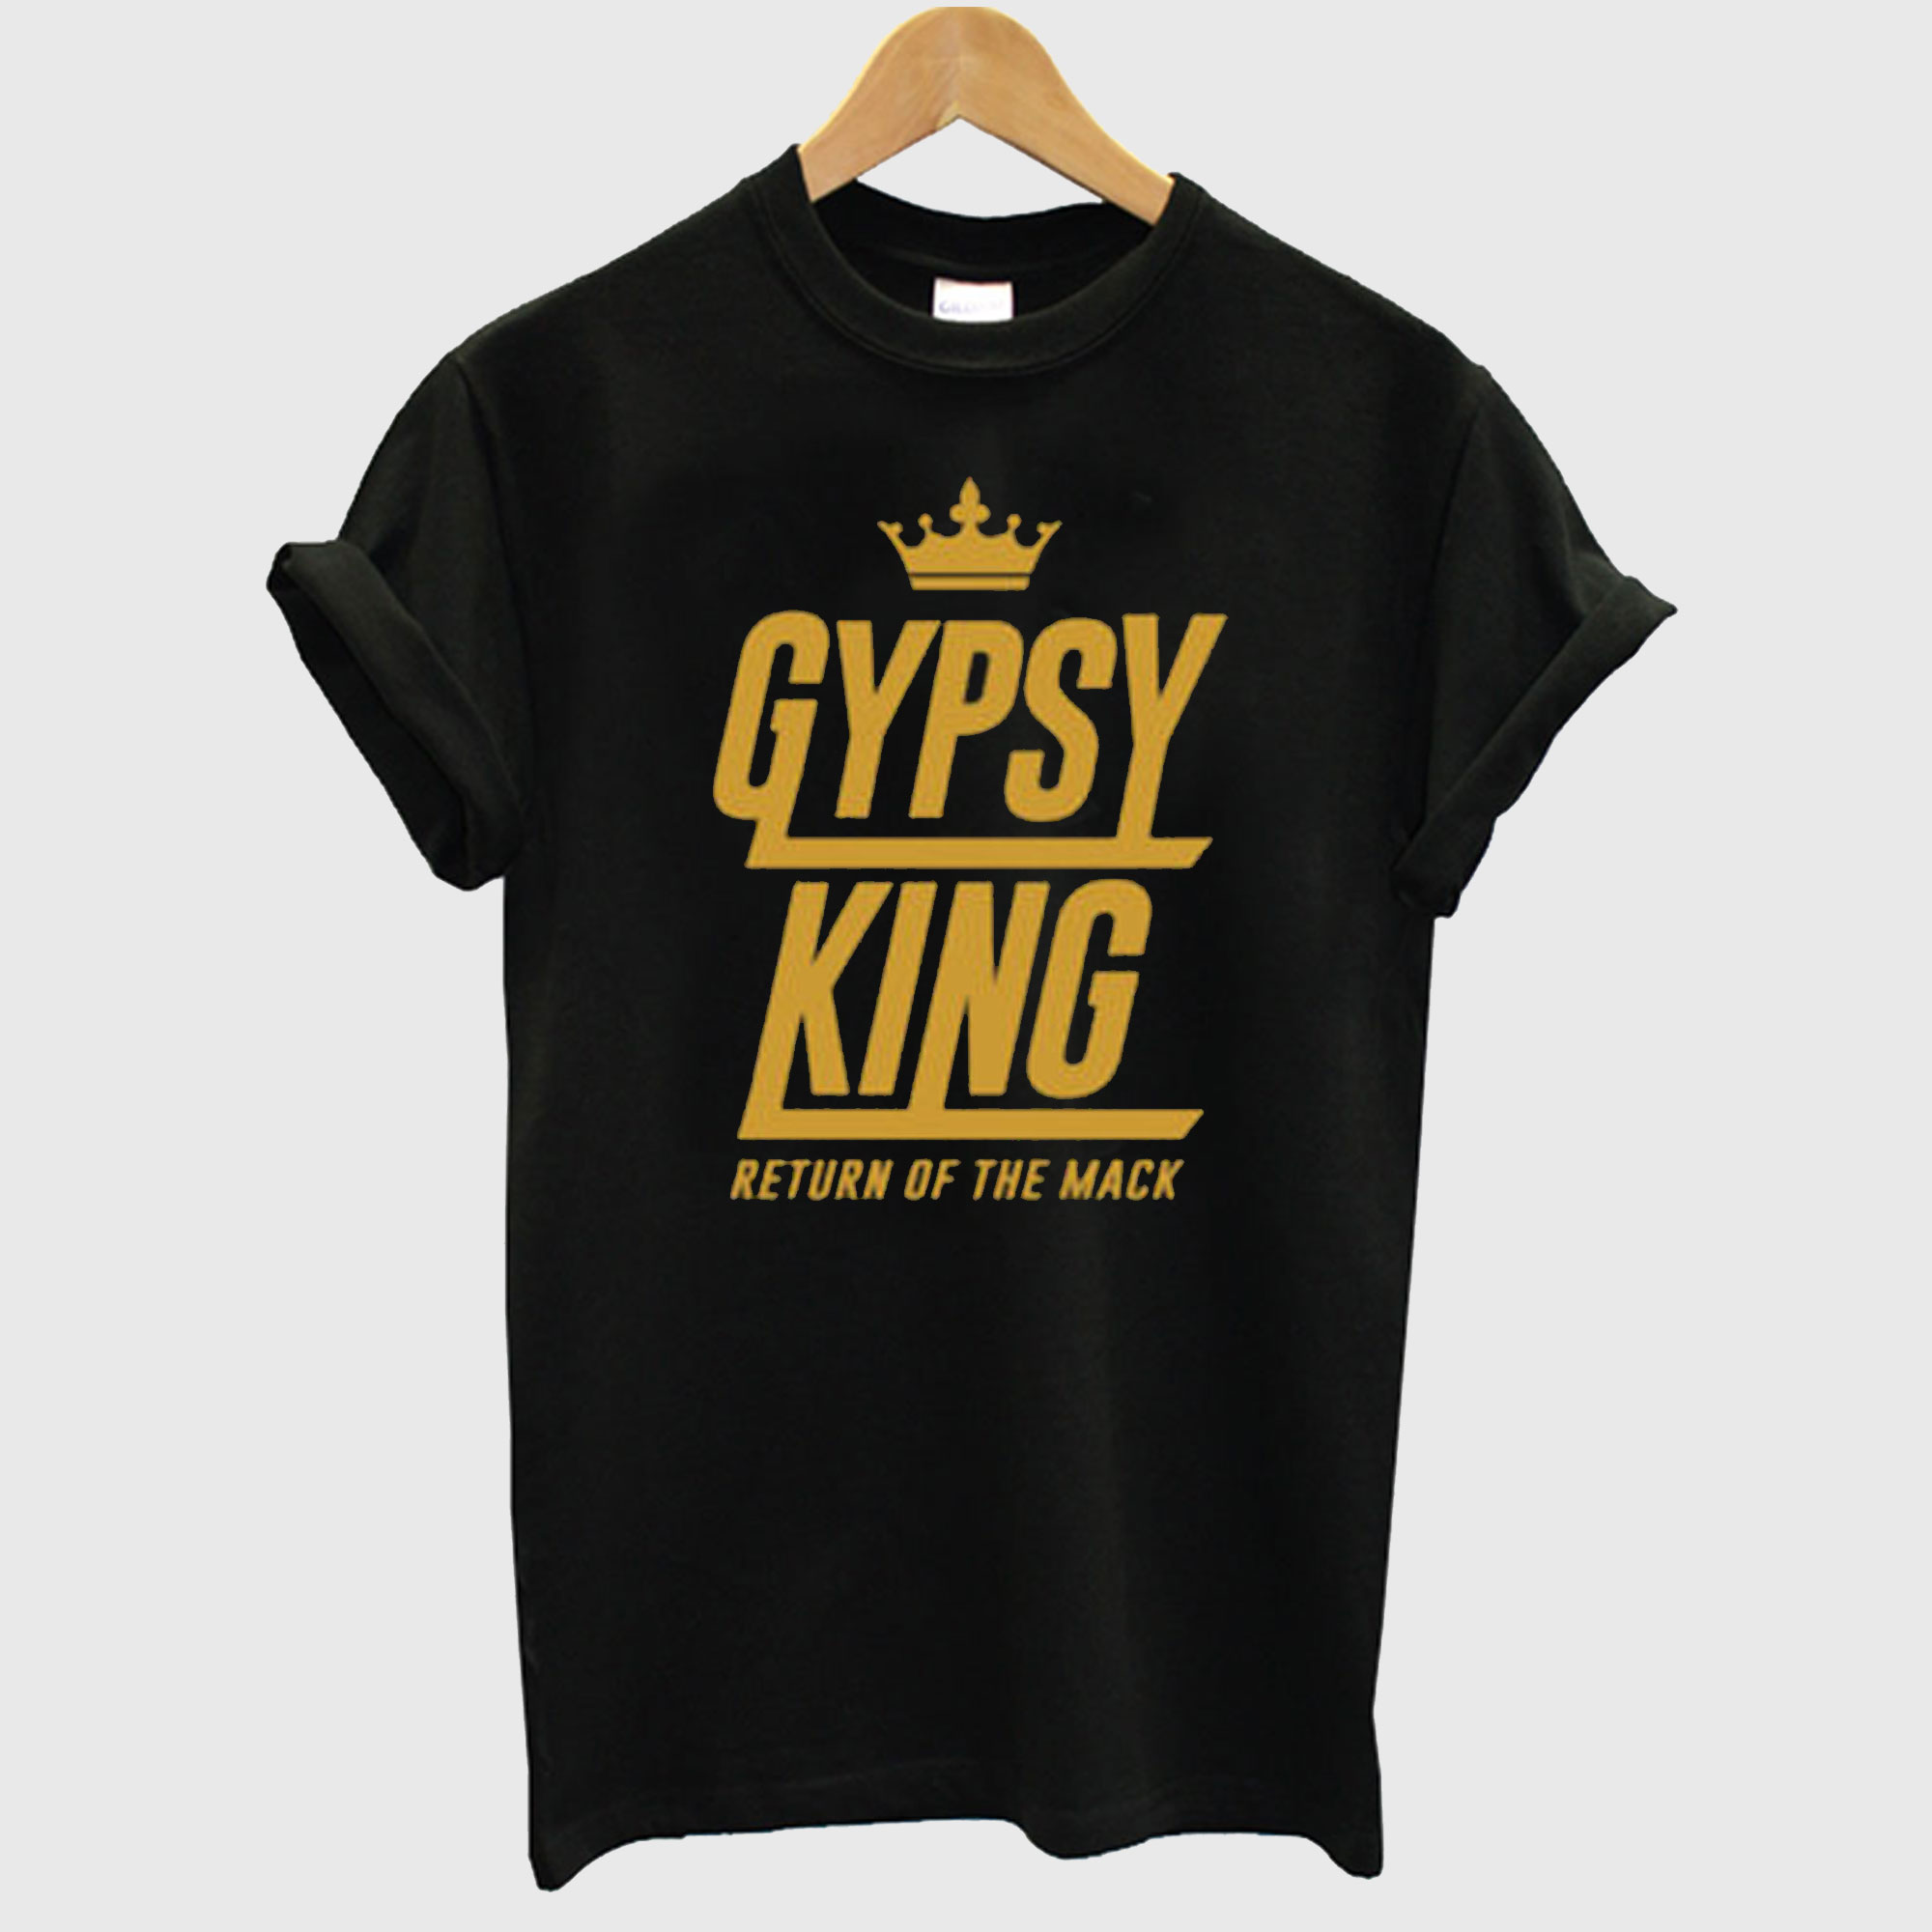 Tyson Gypsy King Return Mack T-shirt